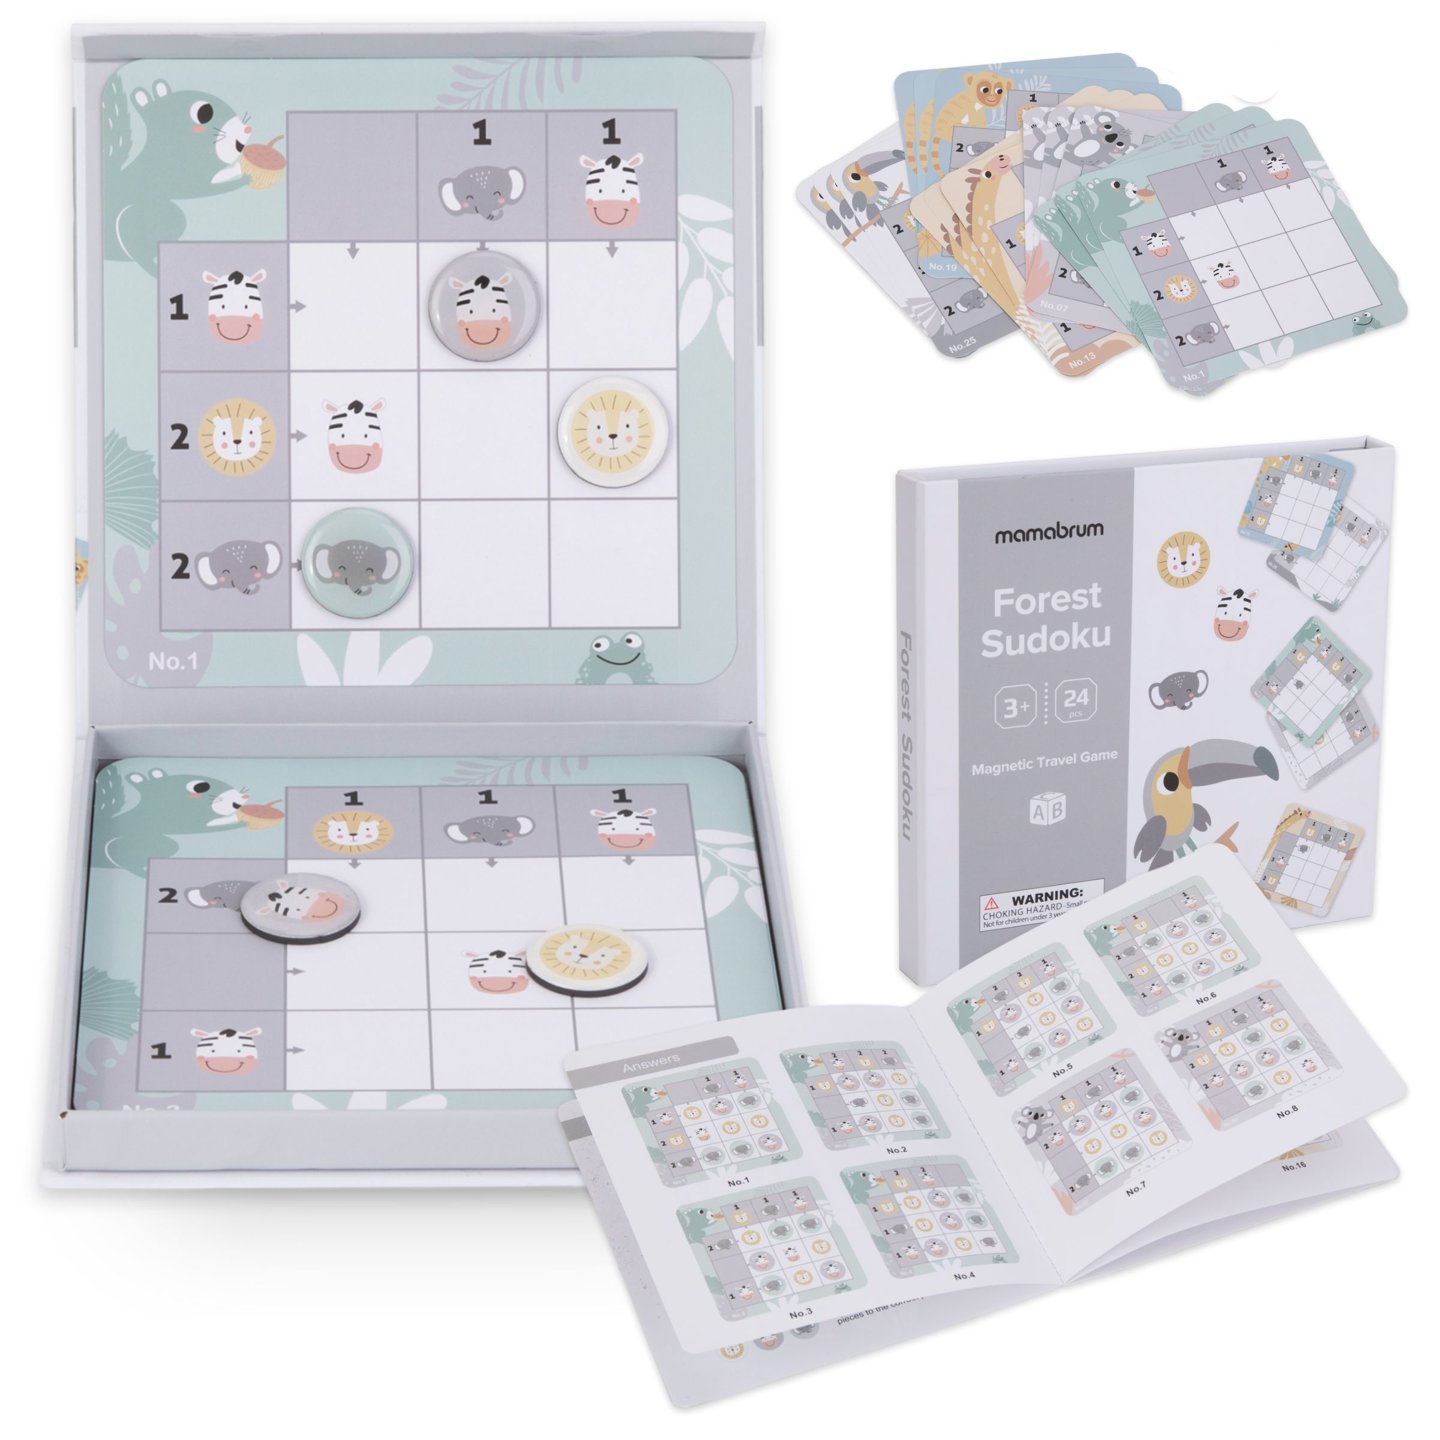 Magnetic travel game - Sudoku for kids